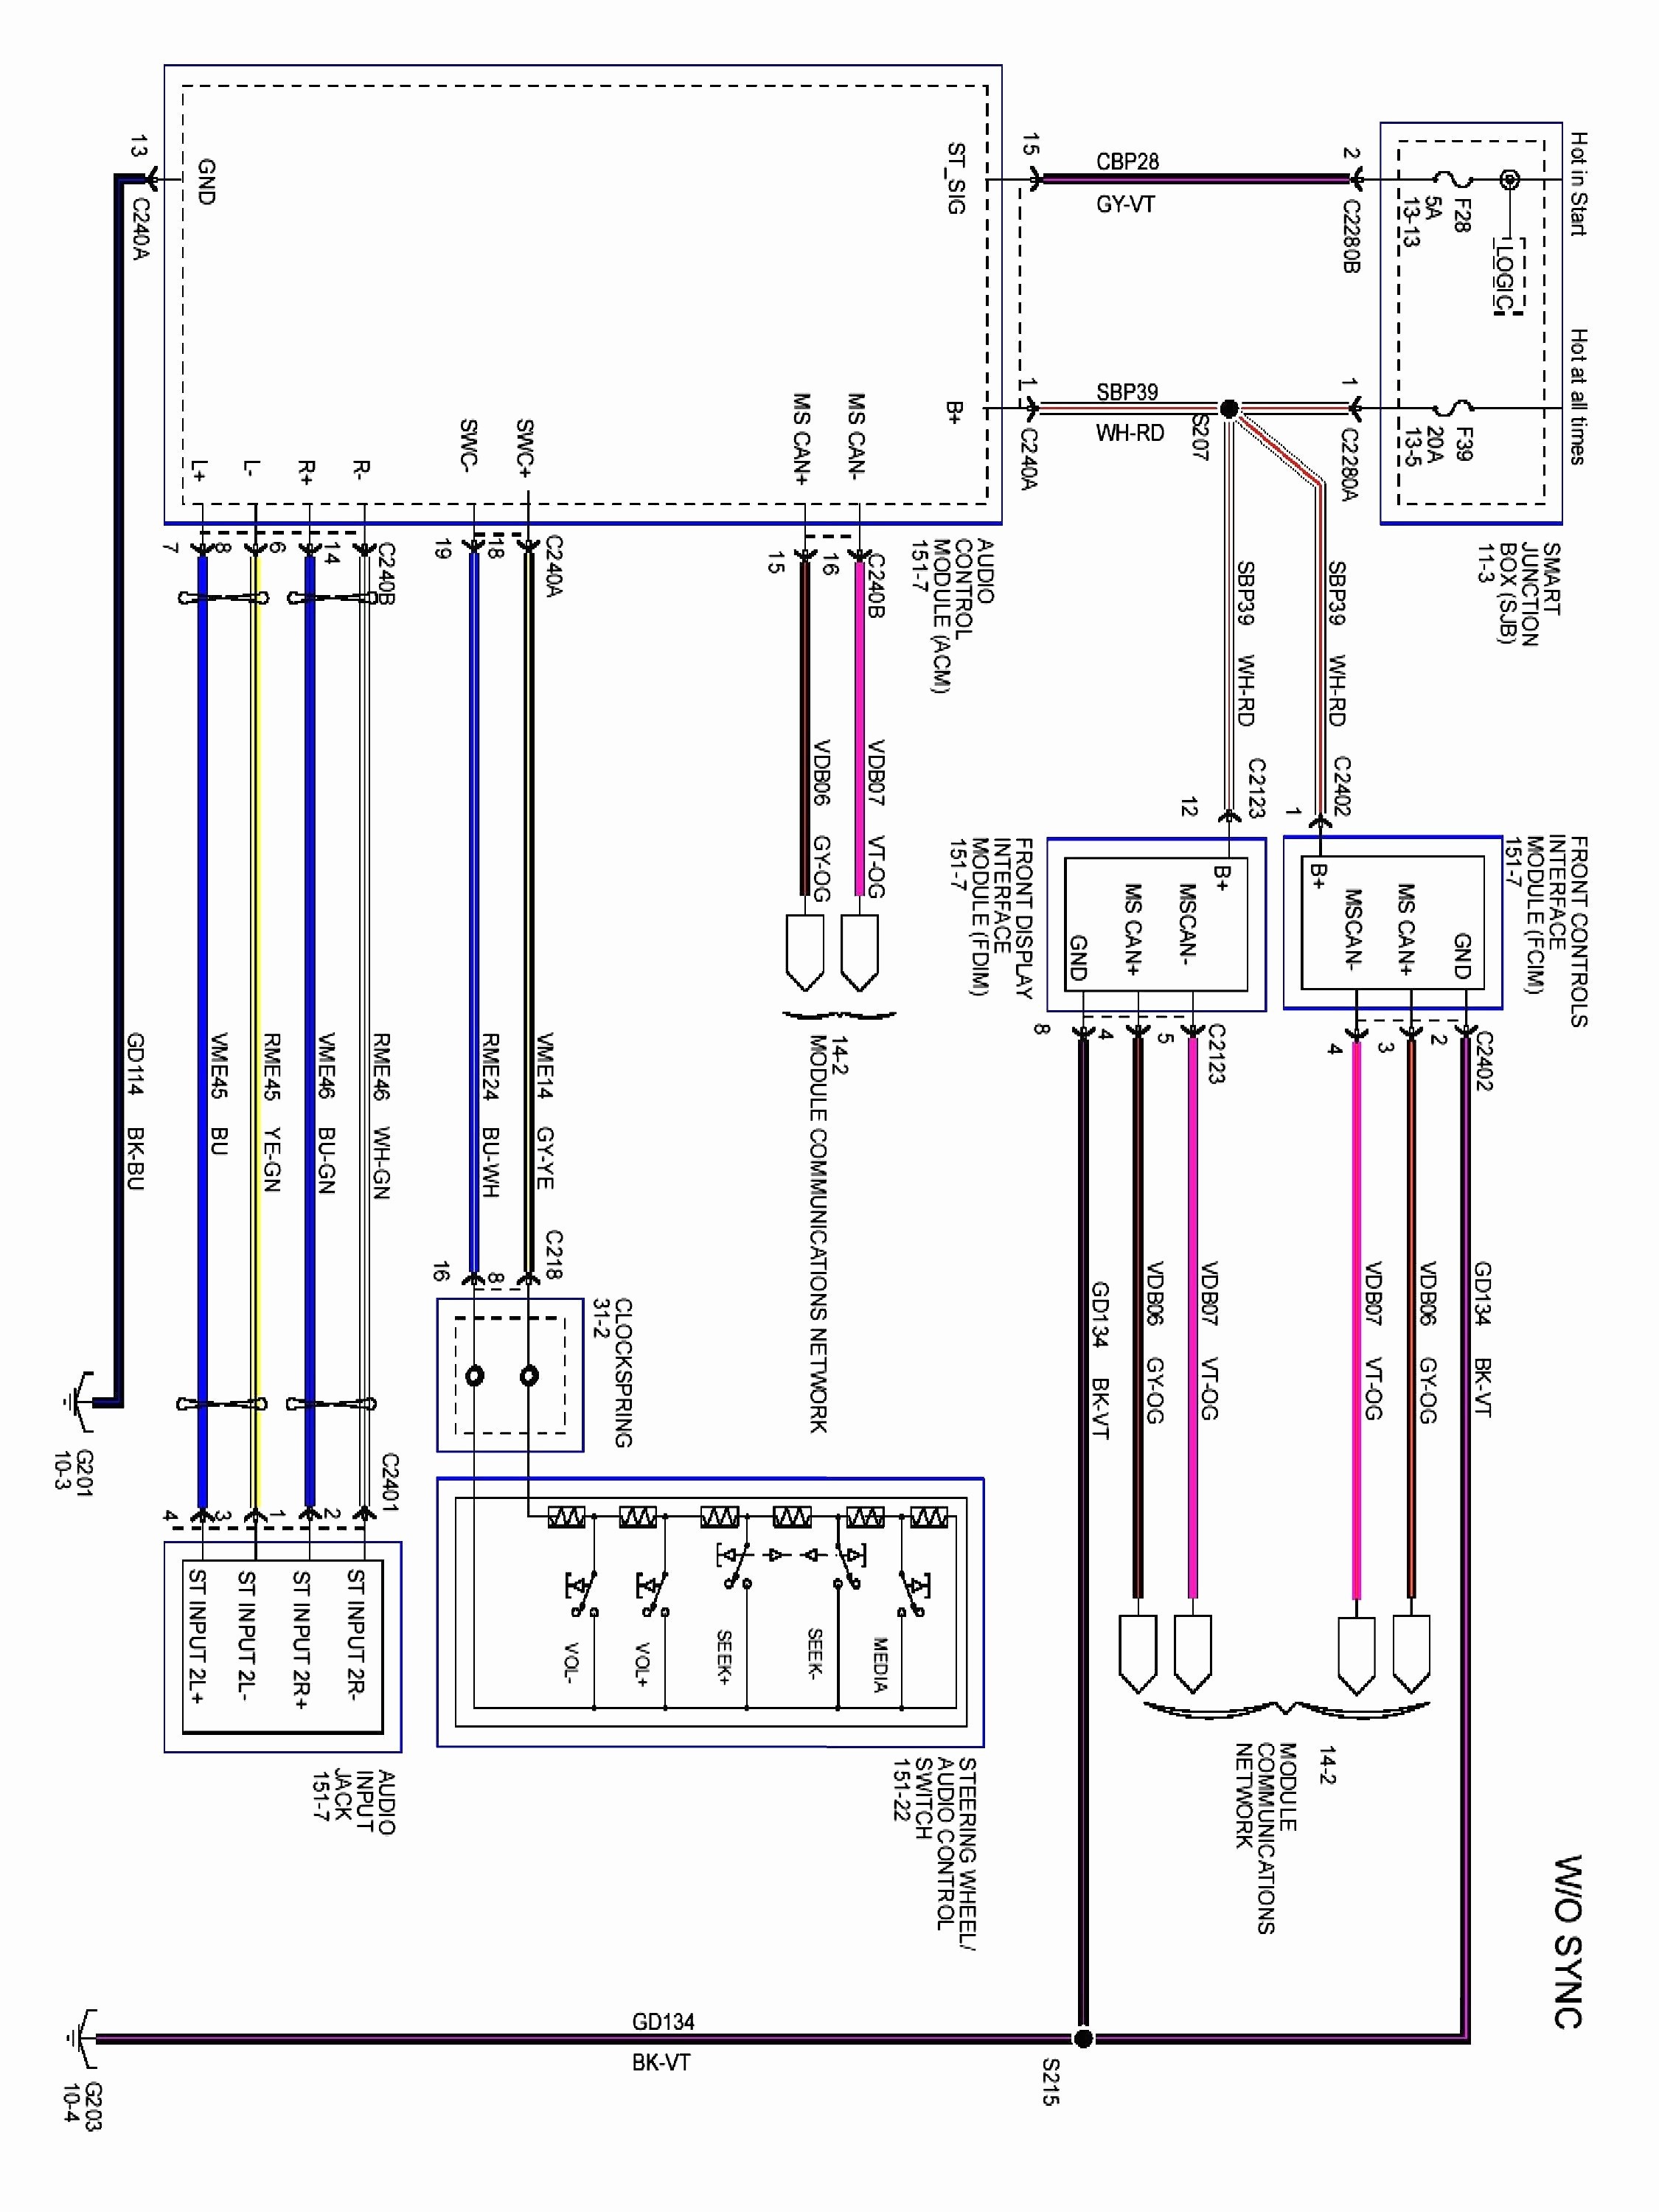 Isuzu Trooper Engine Diagram Mitsubishi Chariot Wiring Diagram Worksheet and Wiring Diagram • Of Isuzu Trooper Engine Diagram